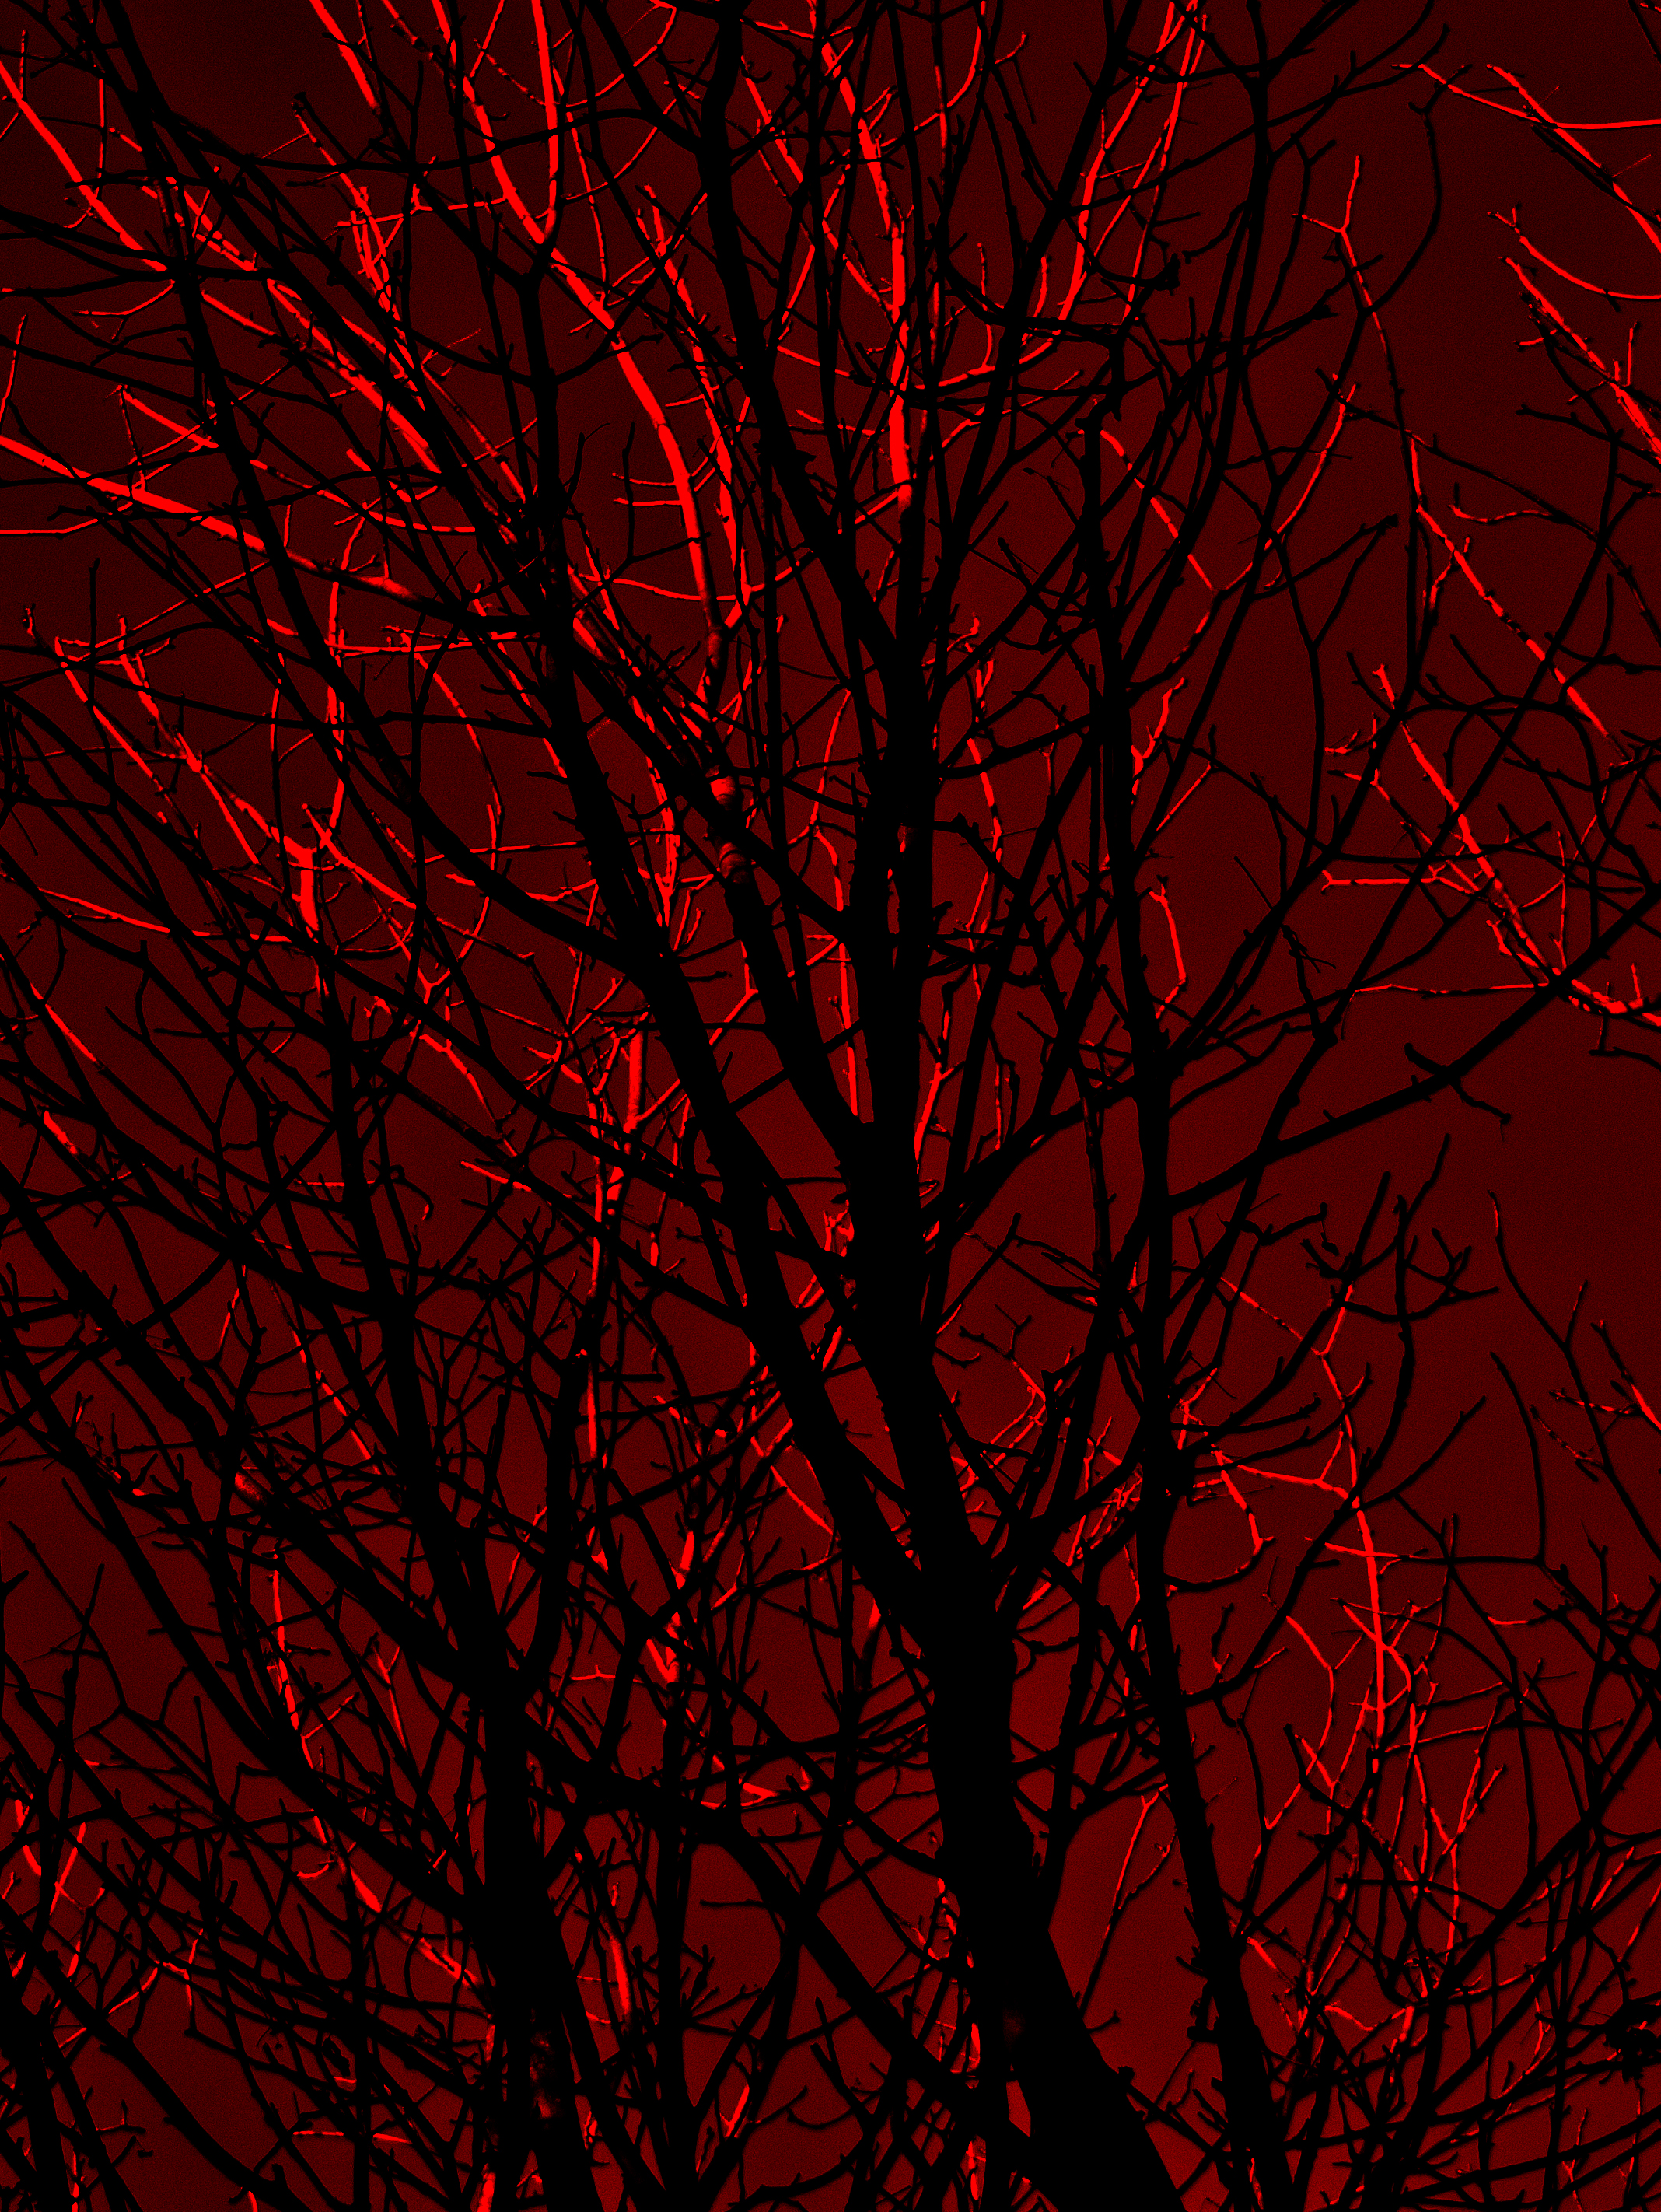 146278 descargar imagen silueta, árboles, rojo, oscuro, sucursales, ramas: fondos de pantalla y protectores de pantalla gratis